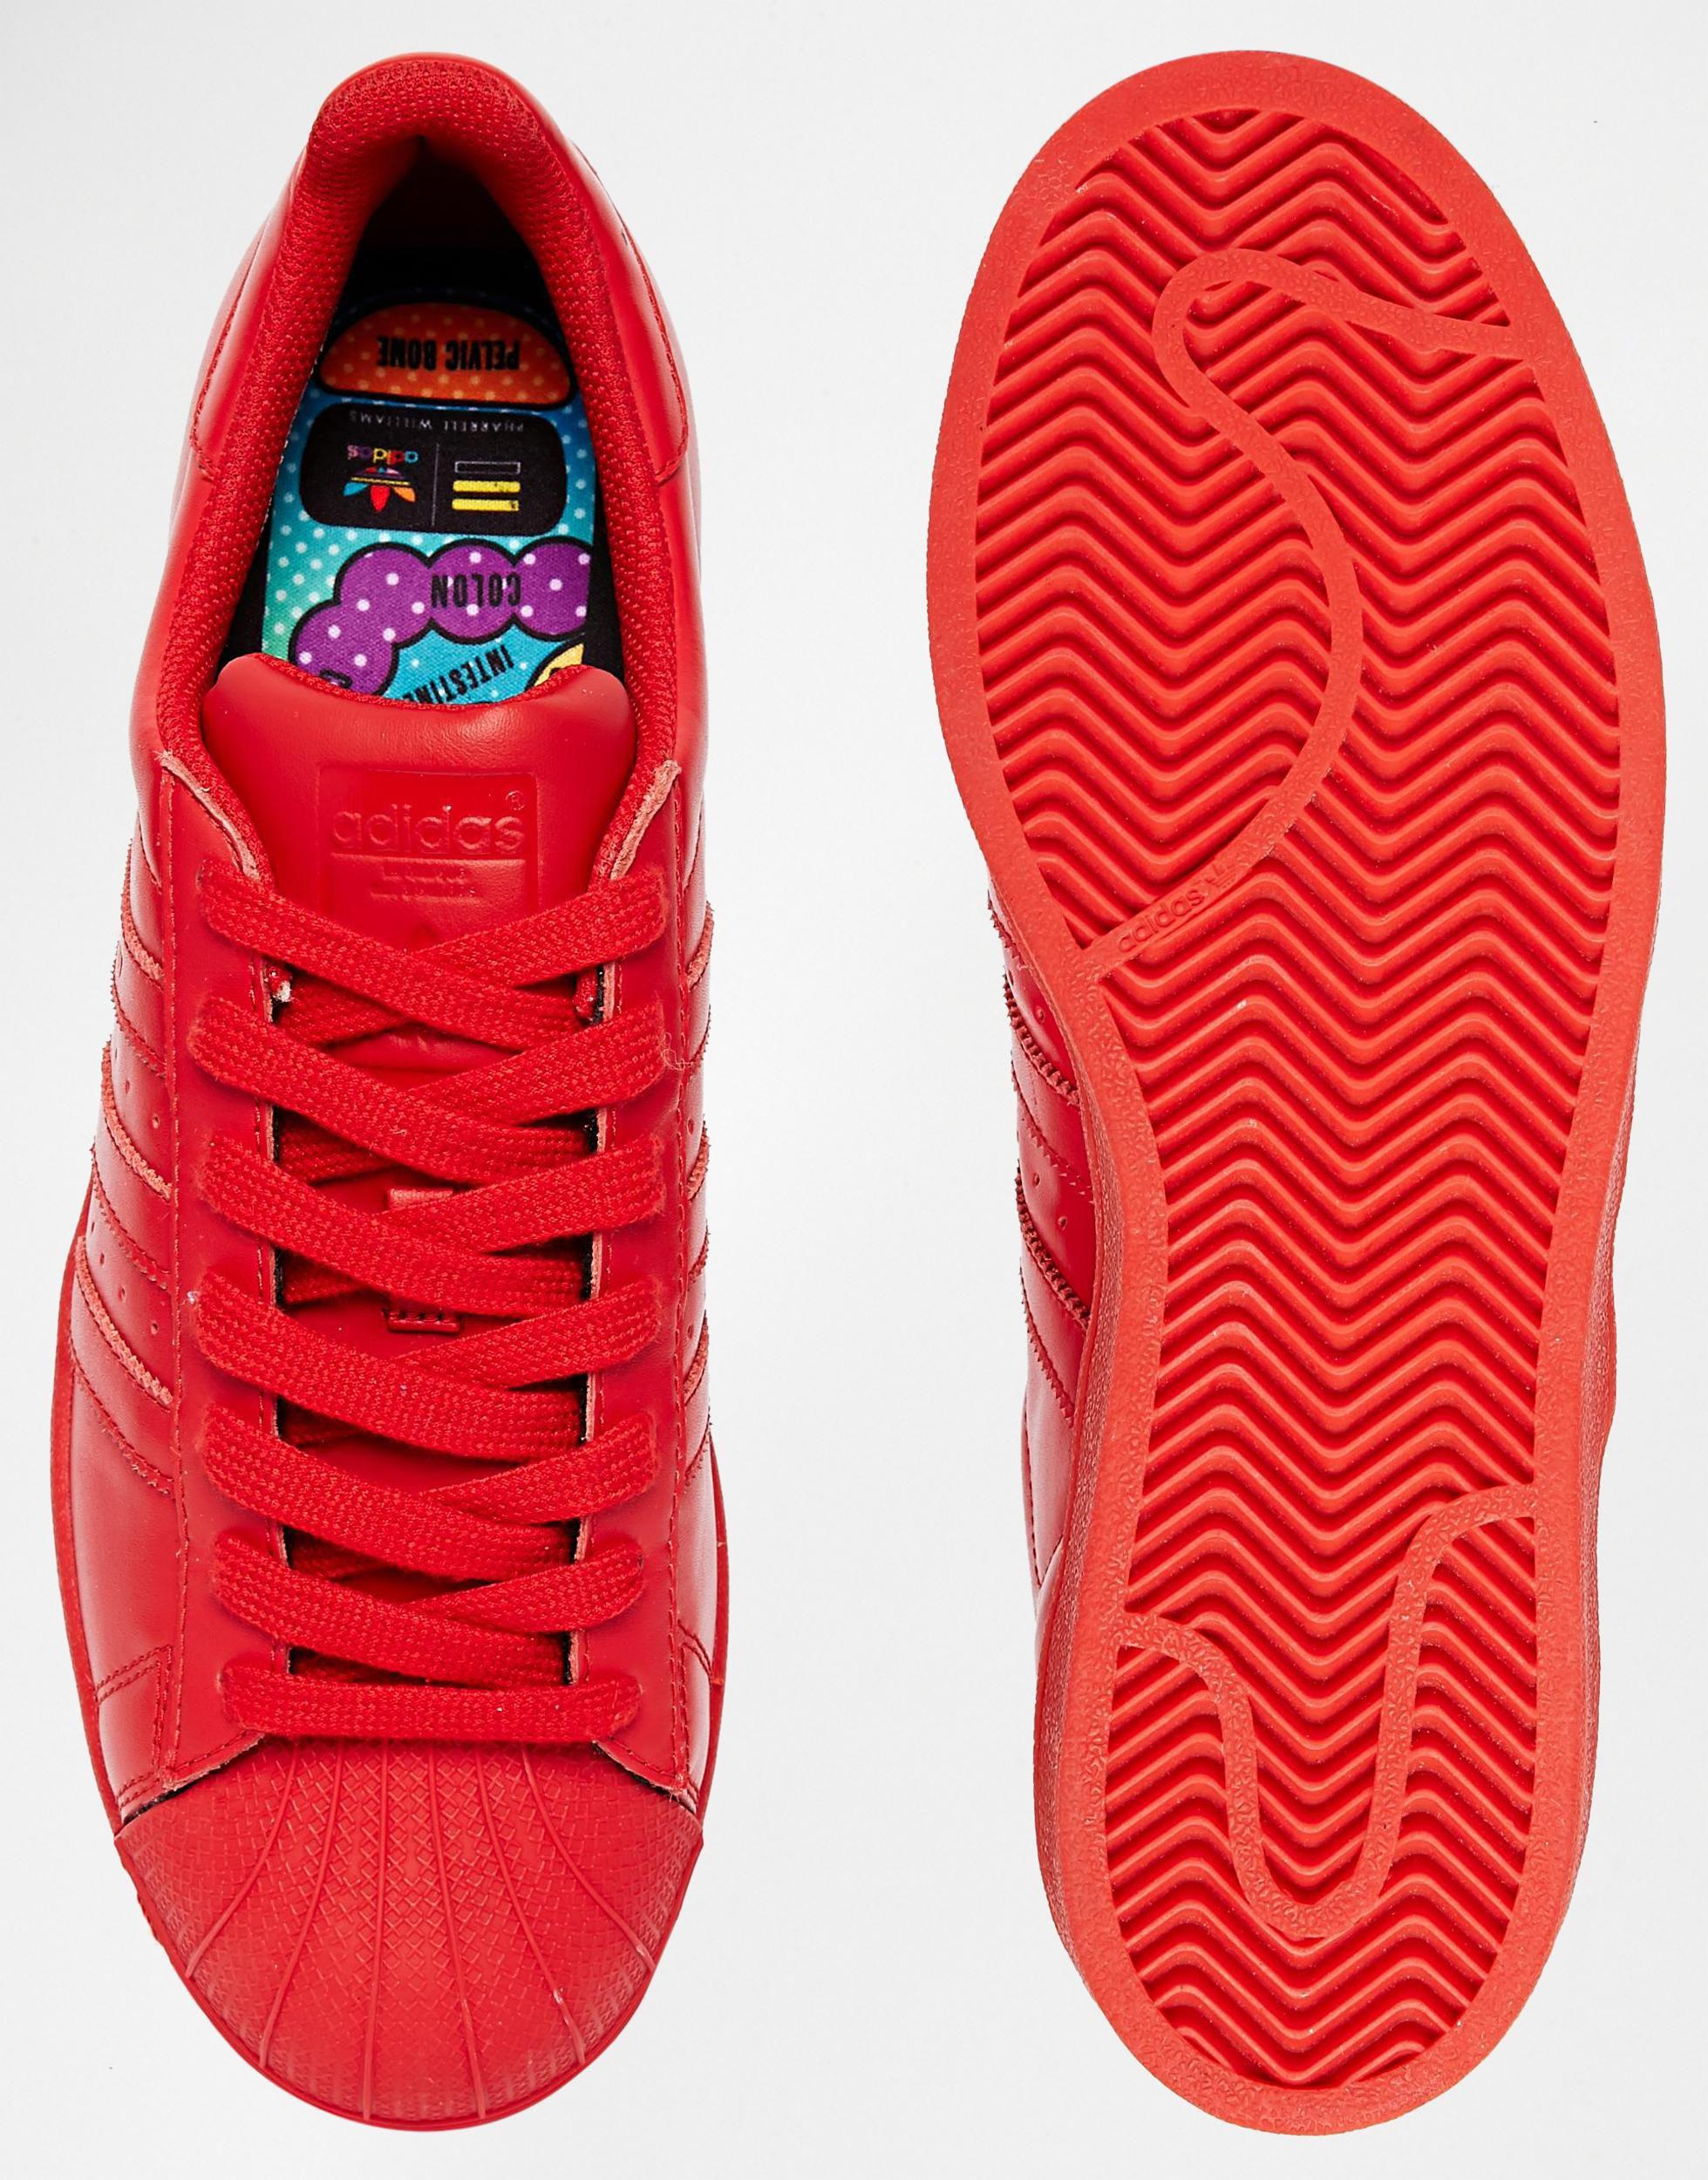 adidas Originals X Pharrell Williams Supercolour Superstar Trainers S41833 in for |